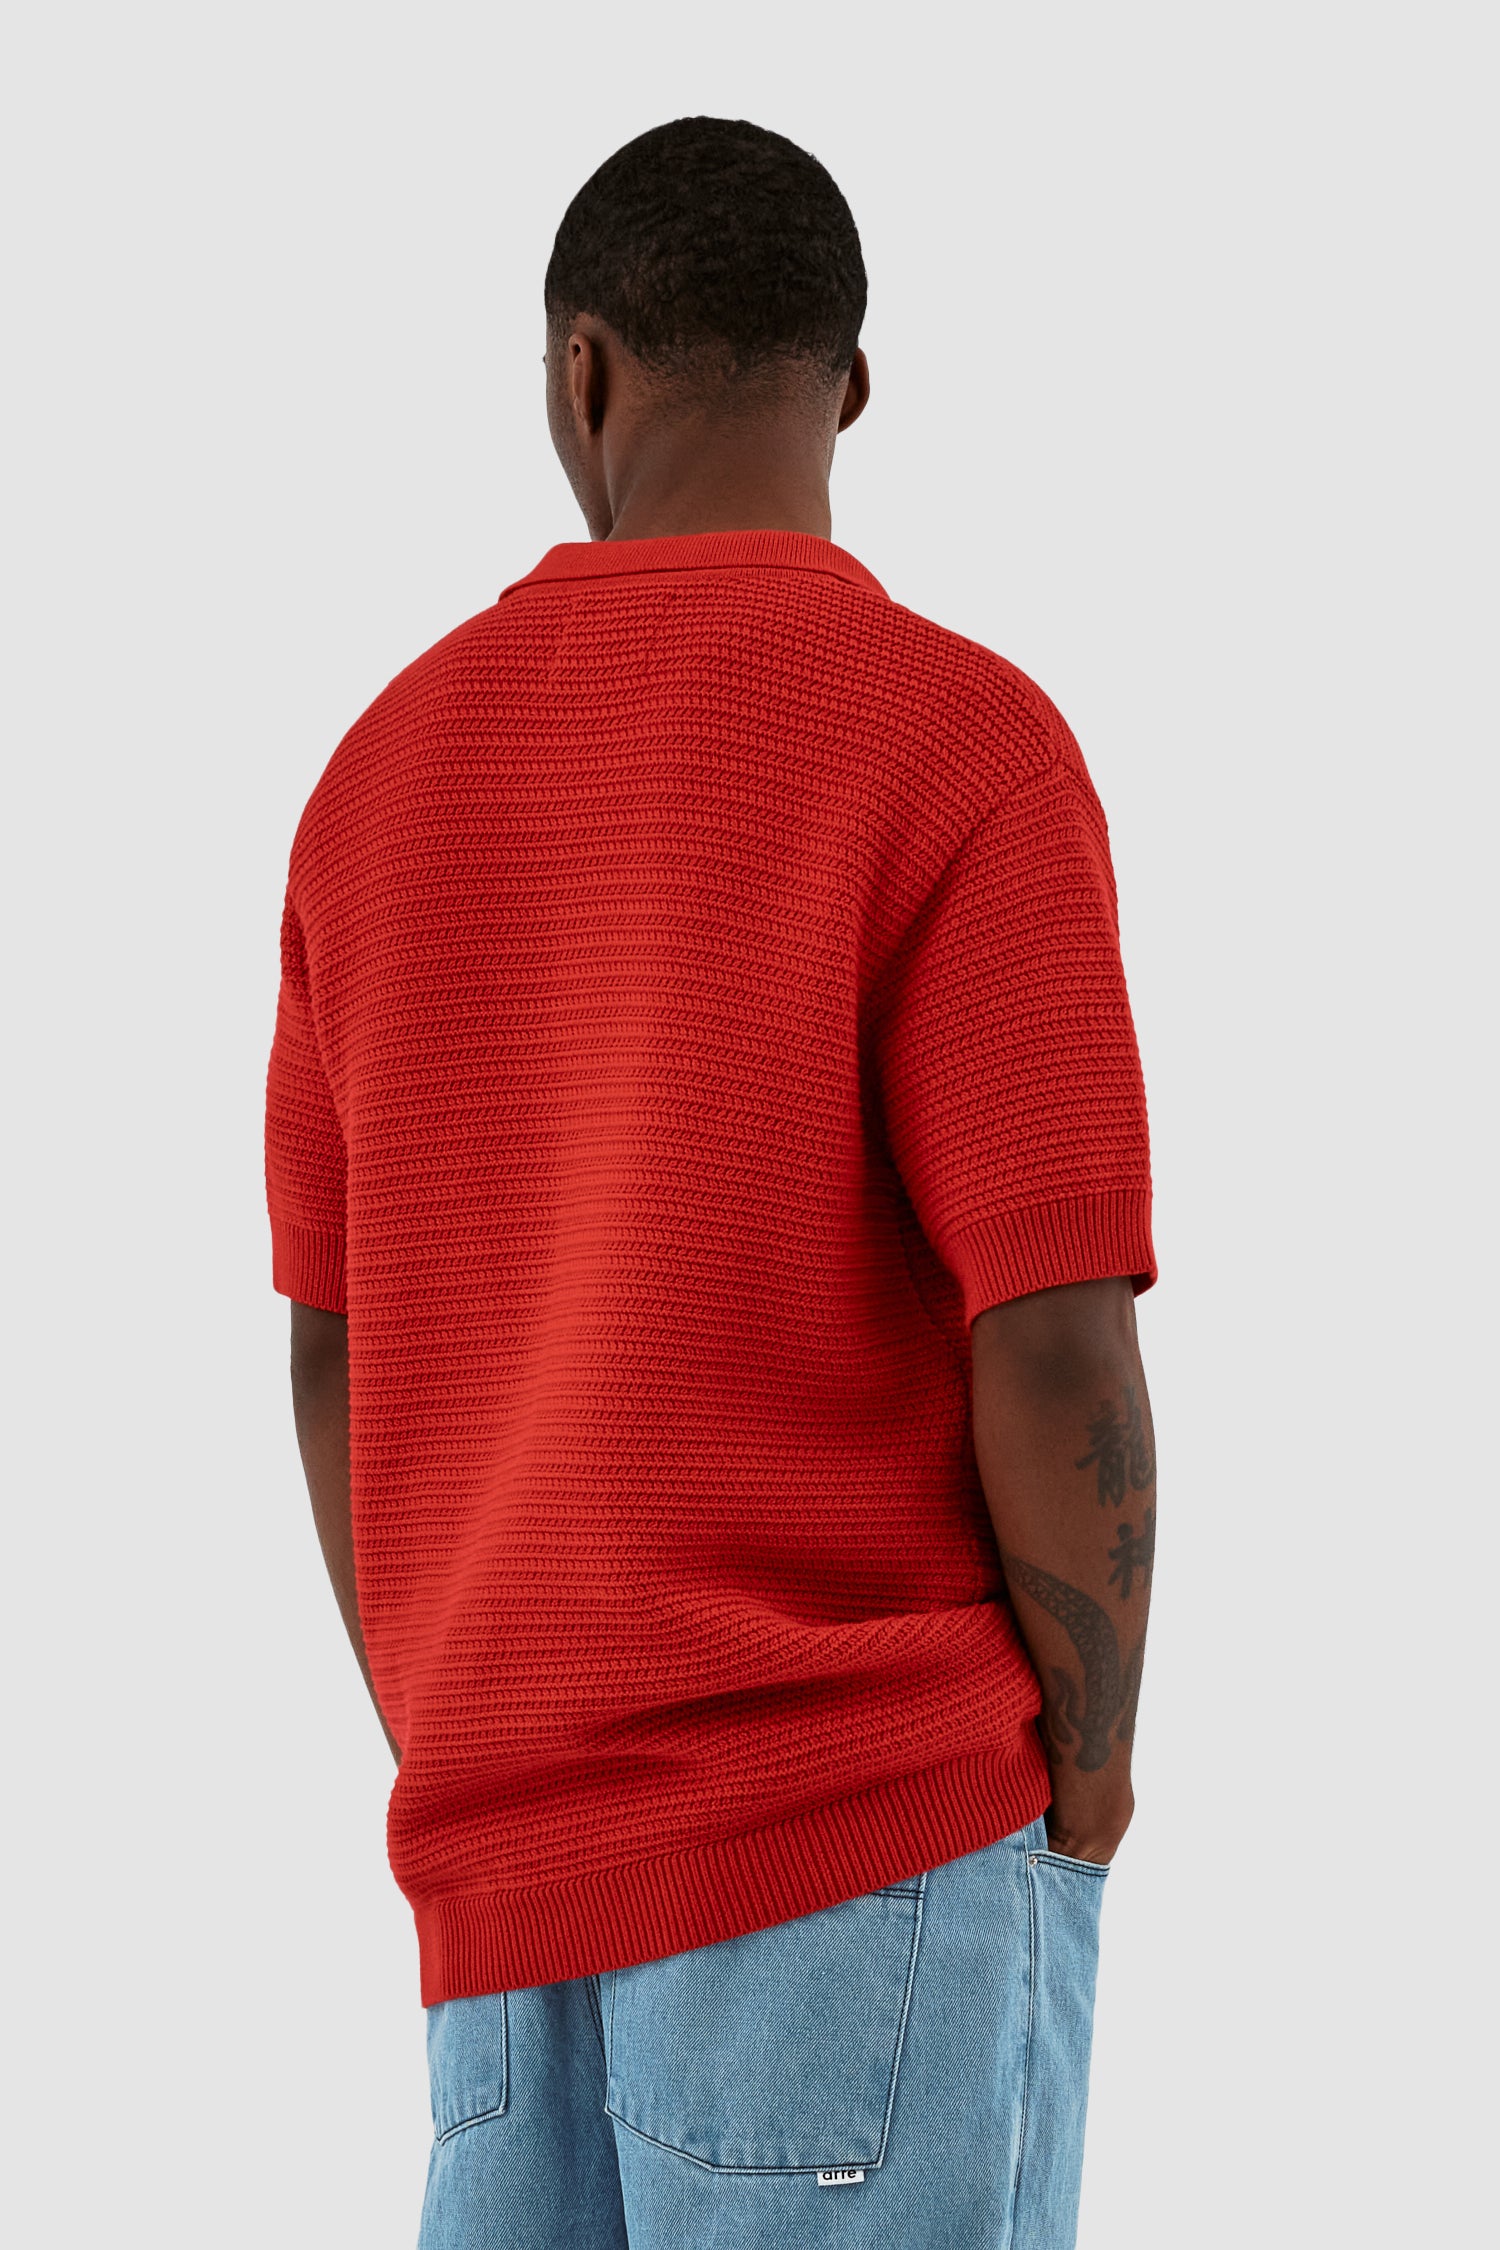 Simon Knit Shirt - Red